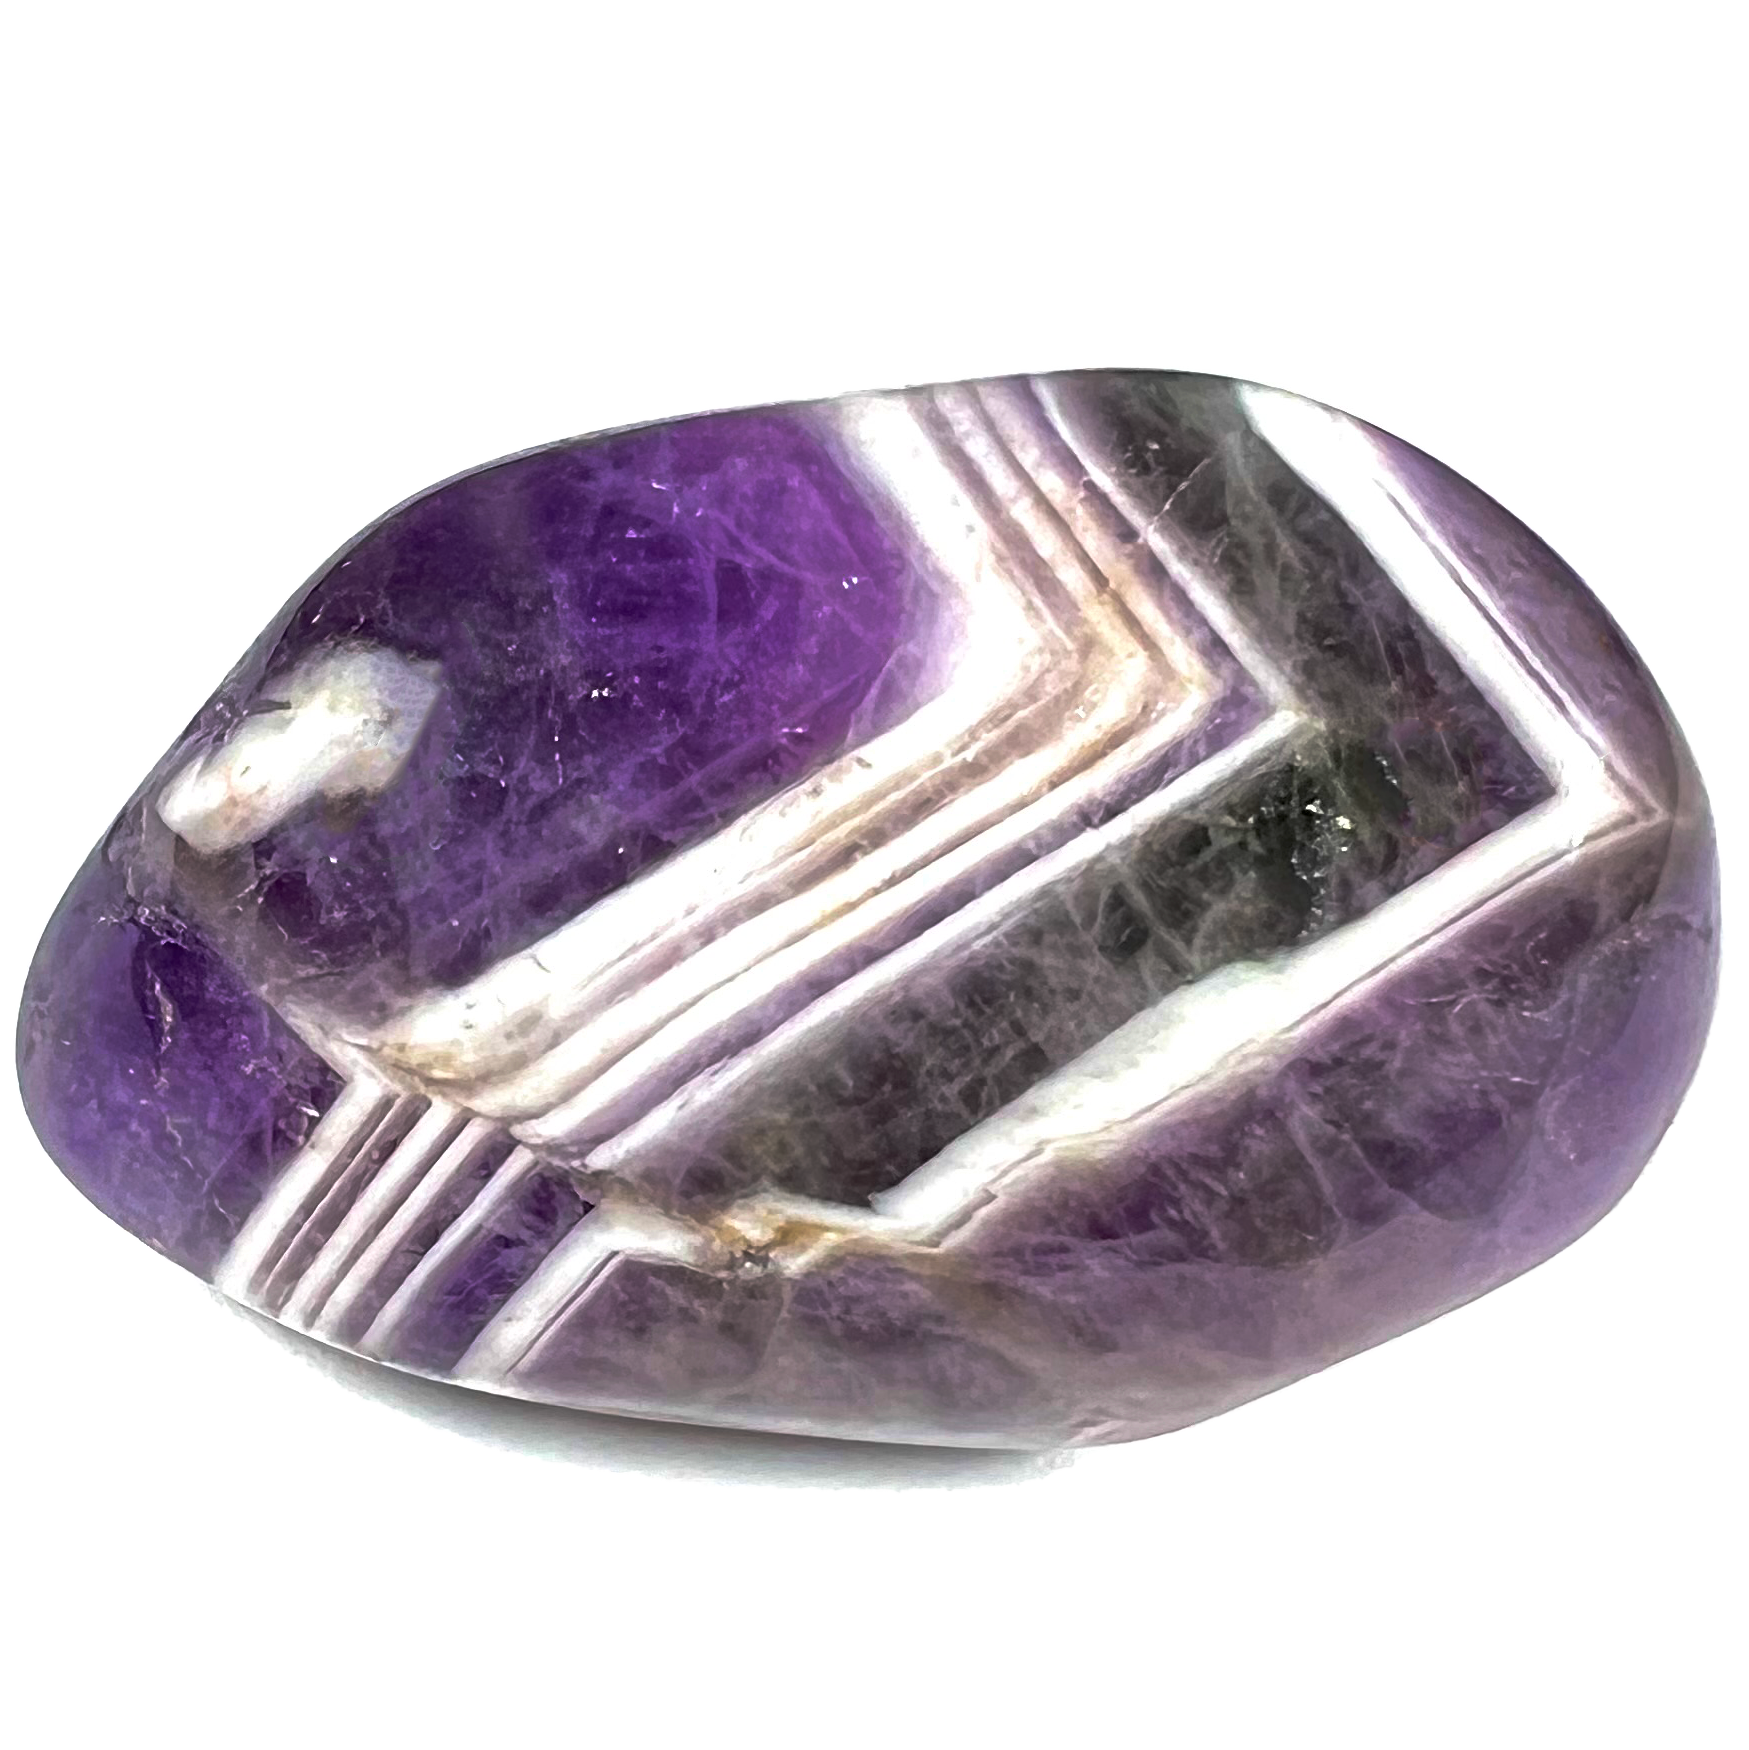 A tumble polished zebra amethyst stone.  The stone is dark purple with white chevron shaped stripes.